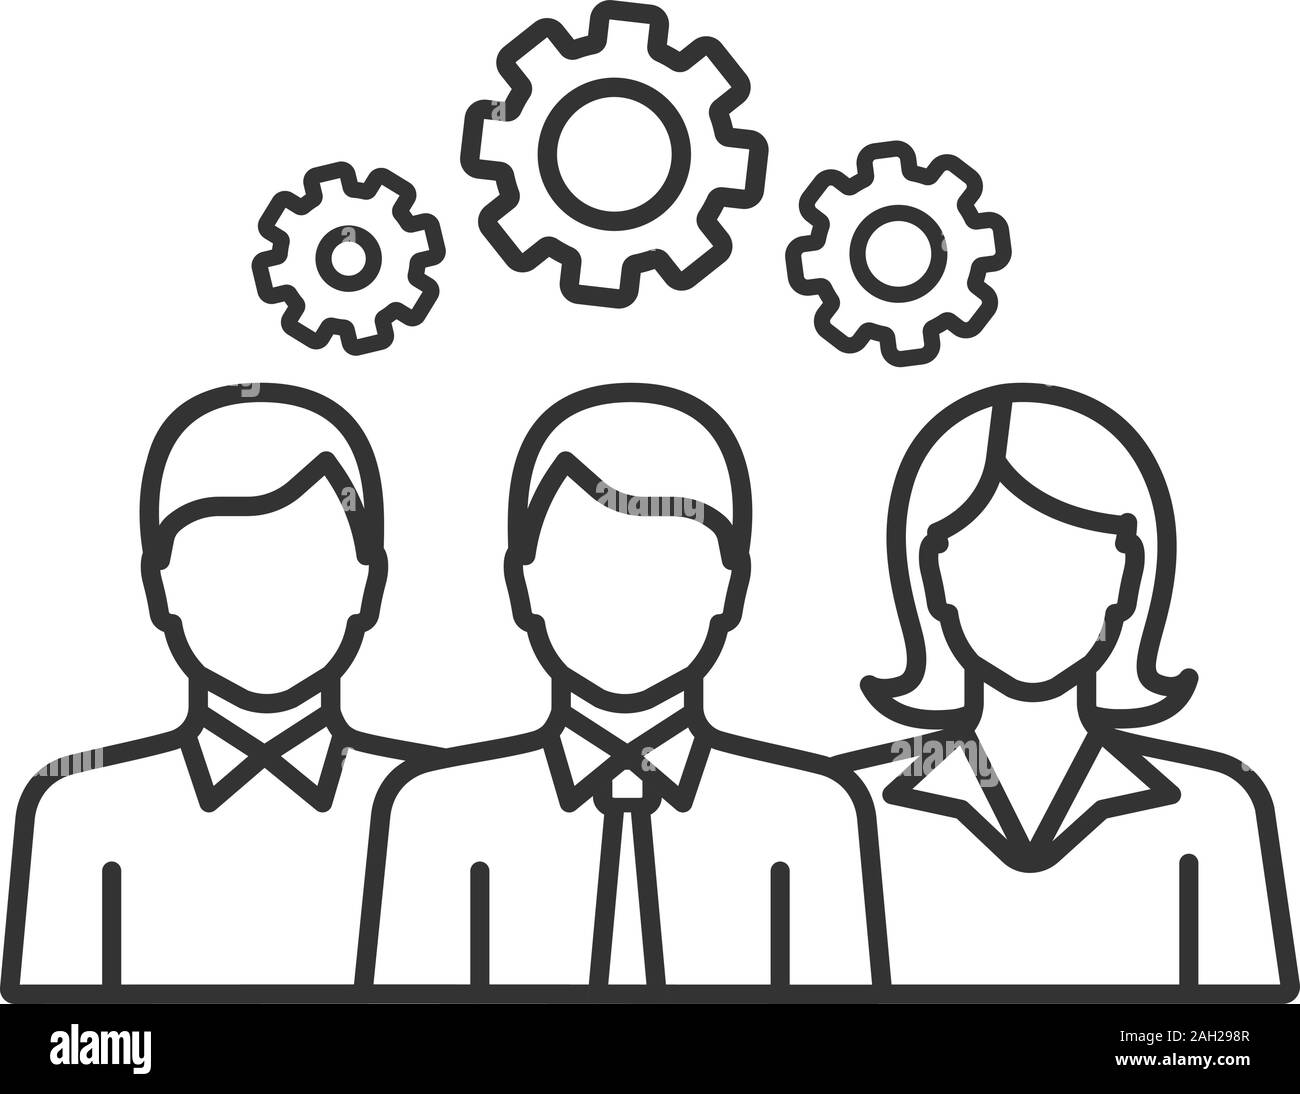 Teamwork linear icon. Leadership. Thin line illustration. Staff